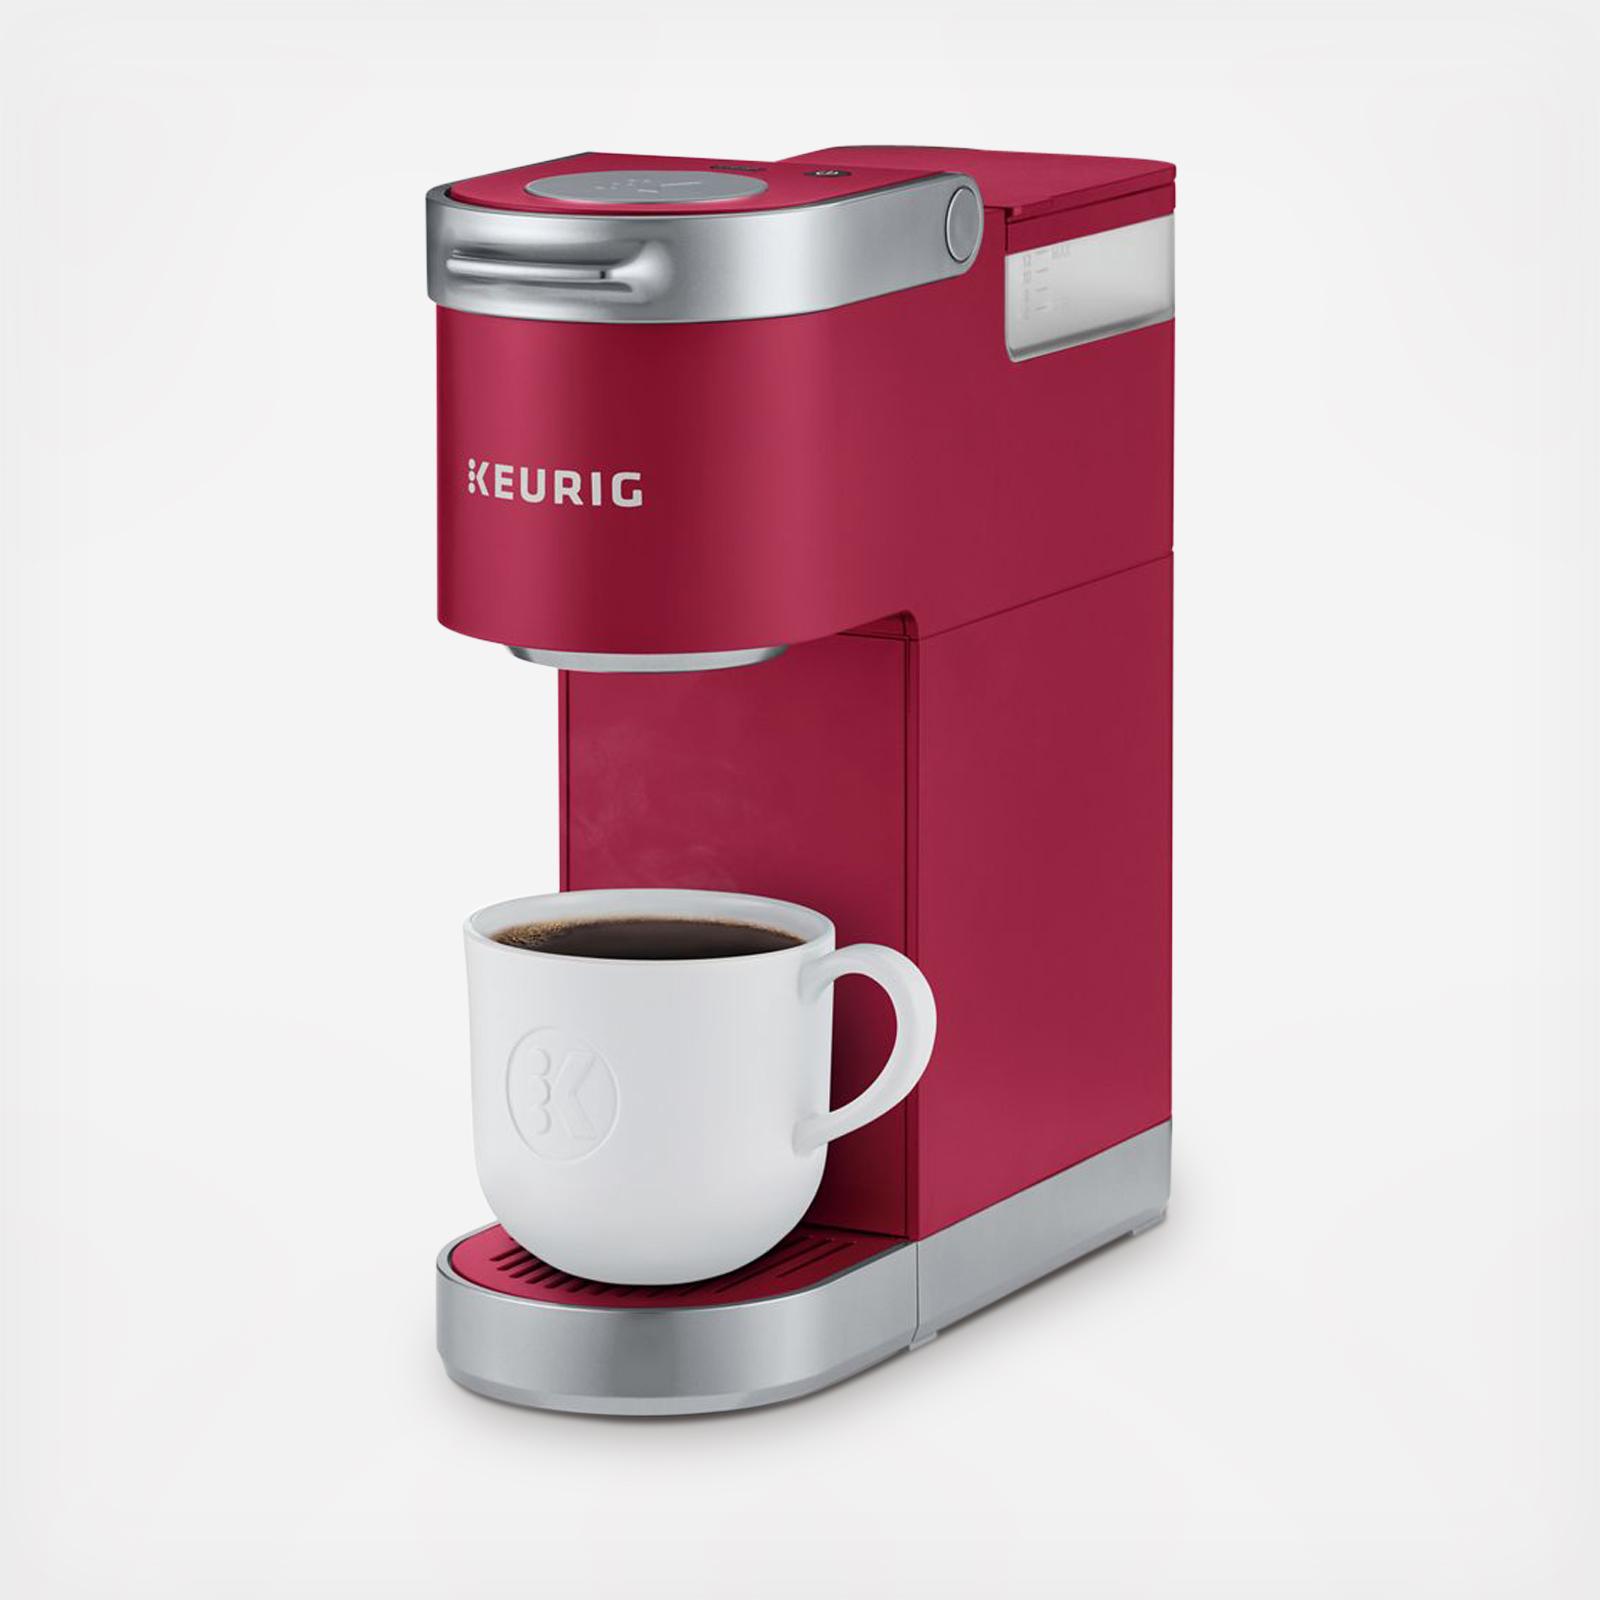 Keurig K-Mini Plus portable coffee maker lets you enjoy truly great coffee  anywhere